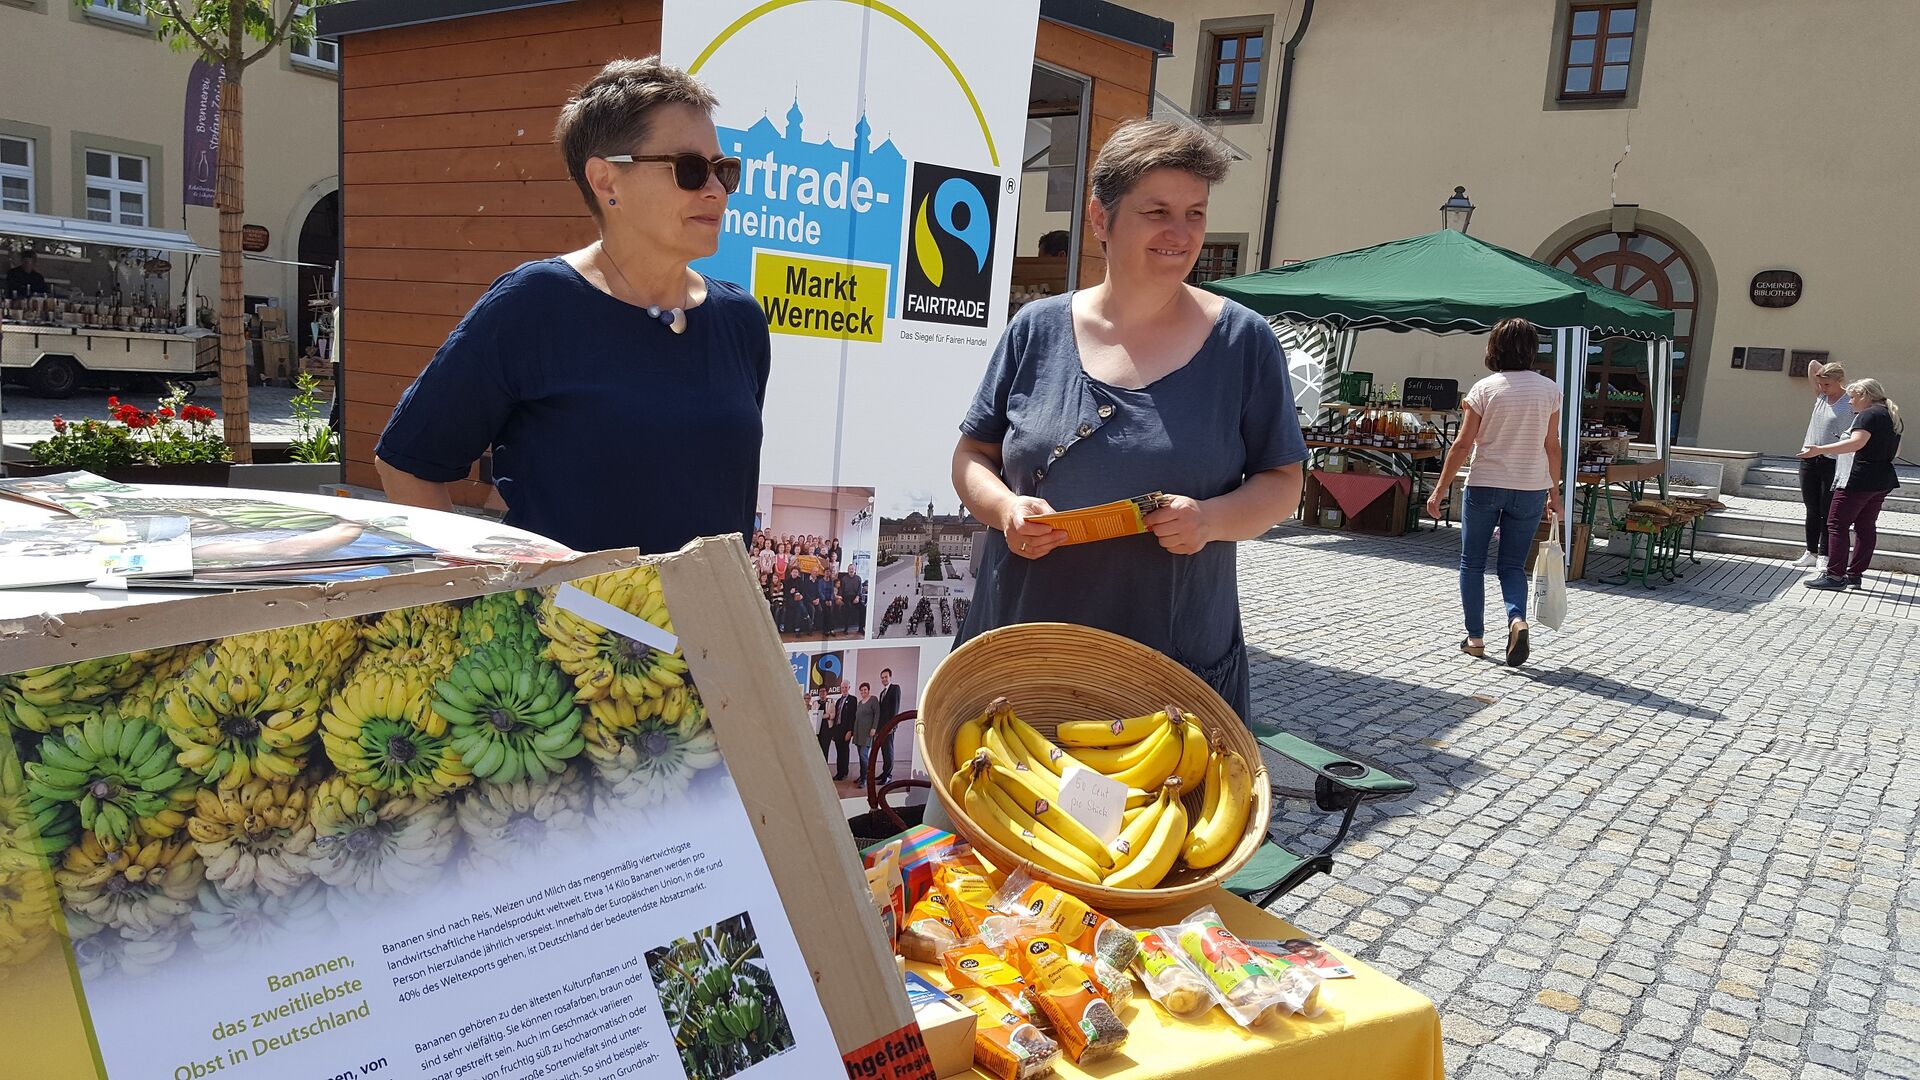 fairtrade-Stand Bananen Bild 2 Biomarkt 1.6.19